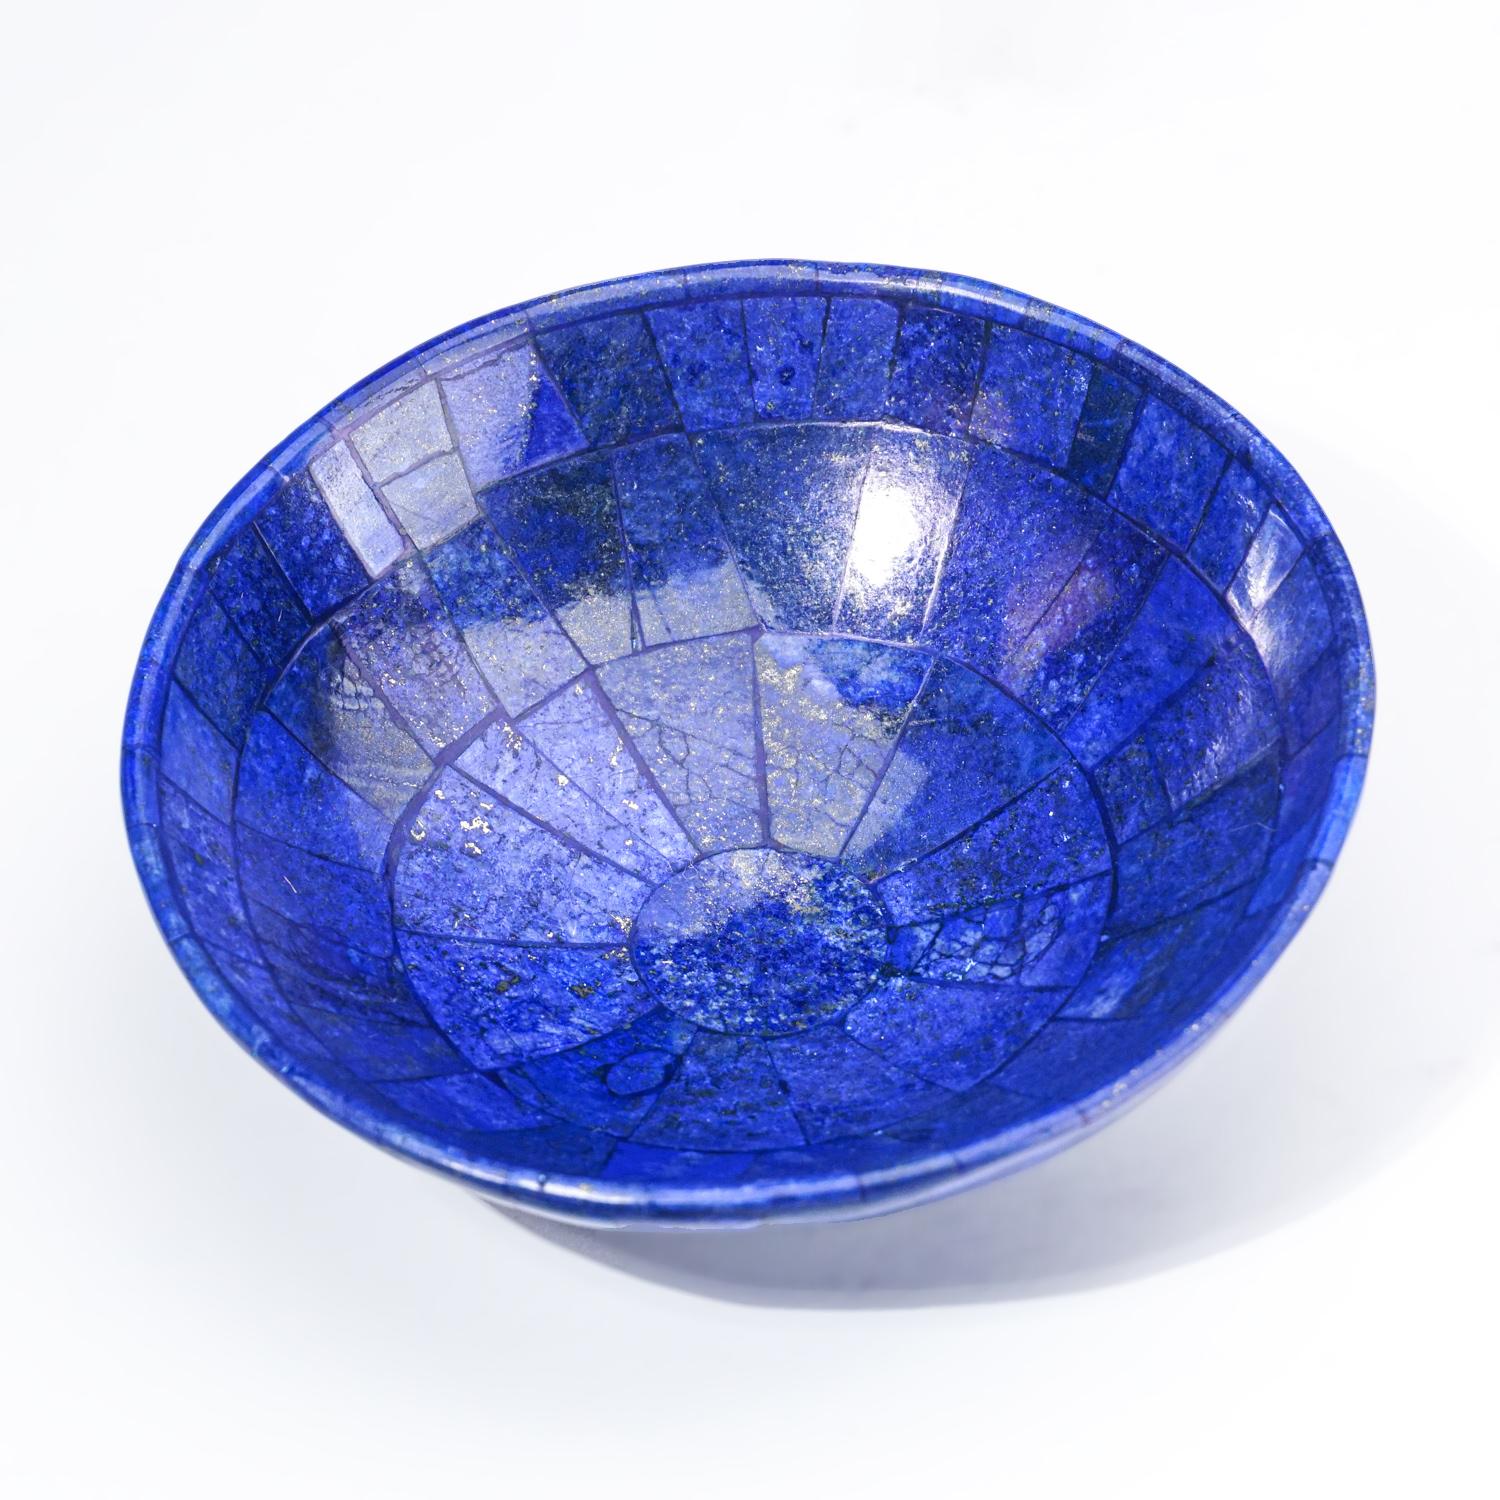 Afghan Genuine Polished Lapis Lazuli Bowl (1.7 lbs) For Sale